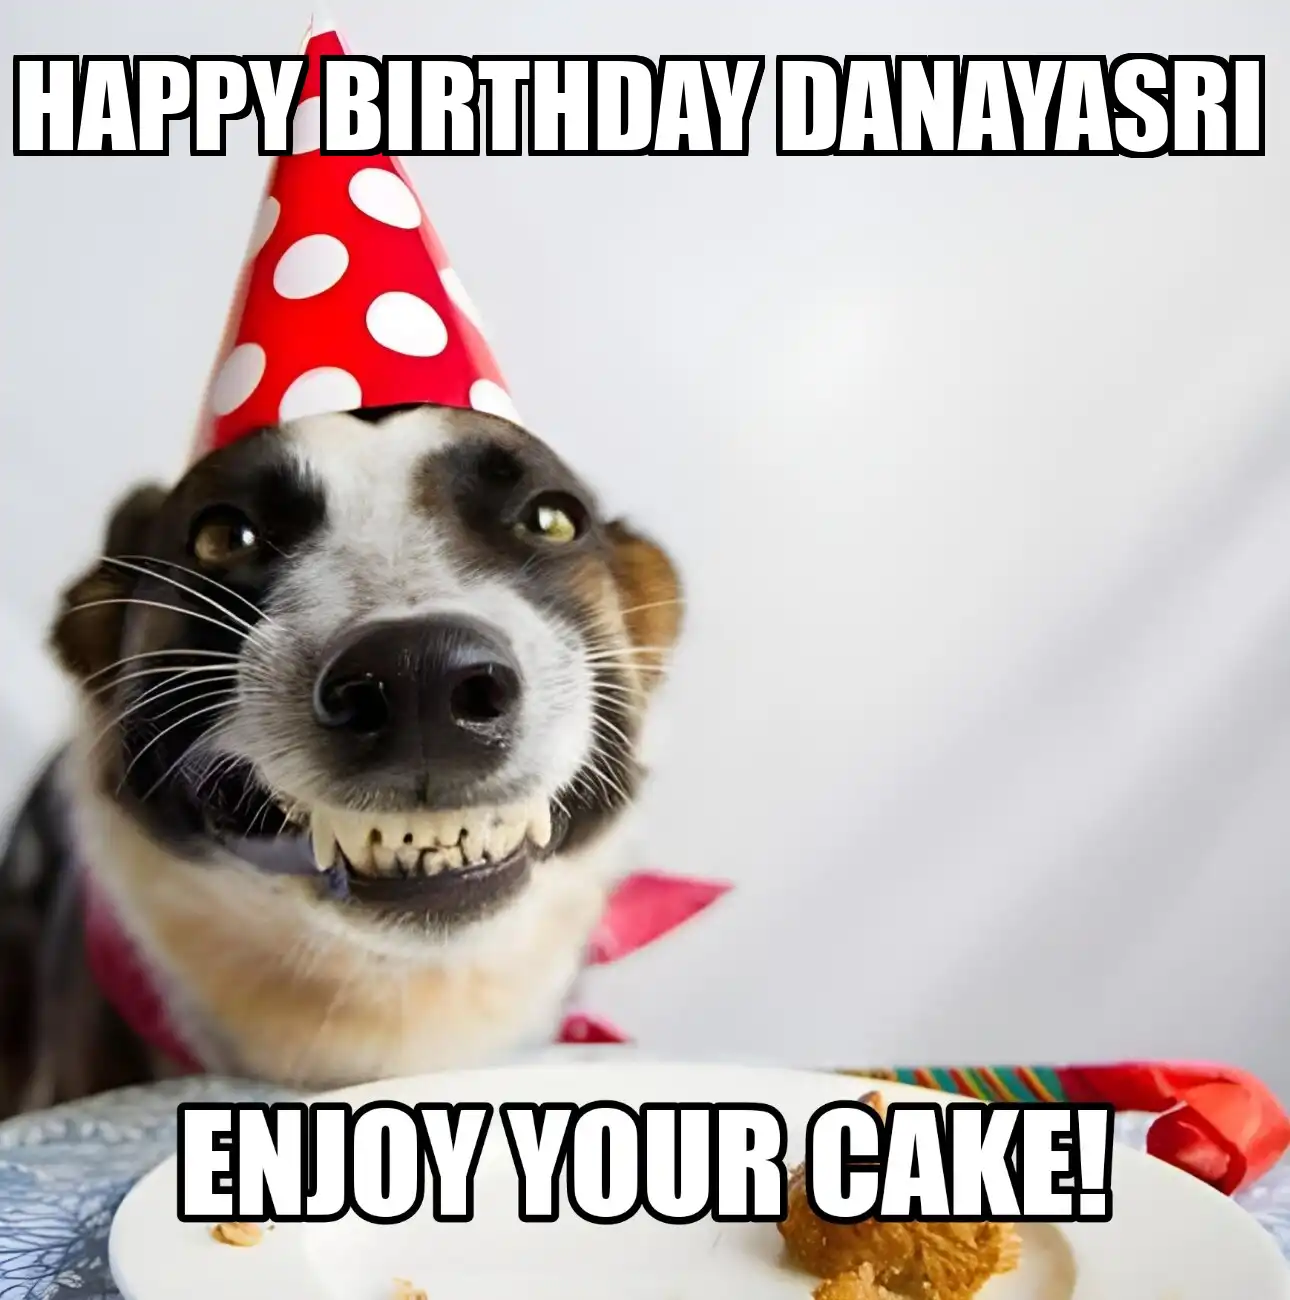 Happy Birthday Danayasri Enjoy Your Cake Dog Meme